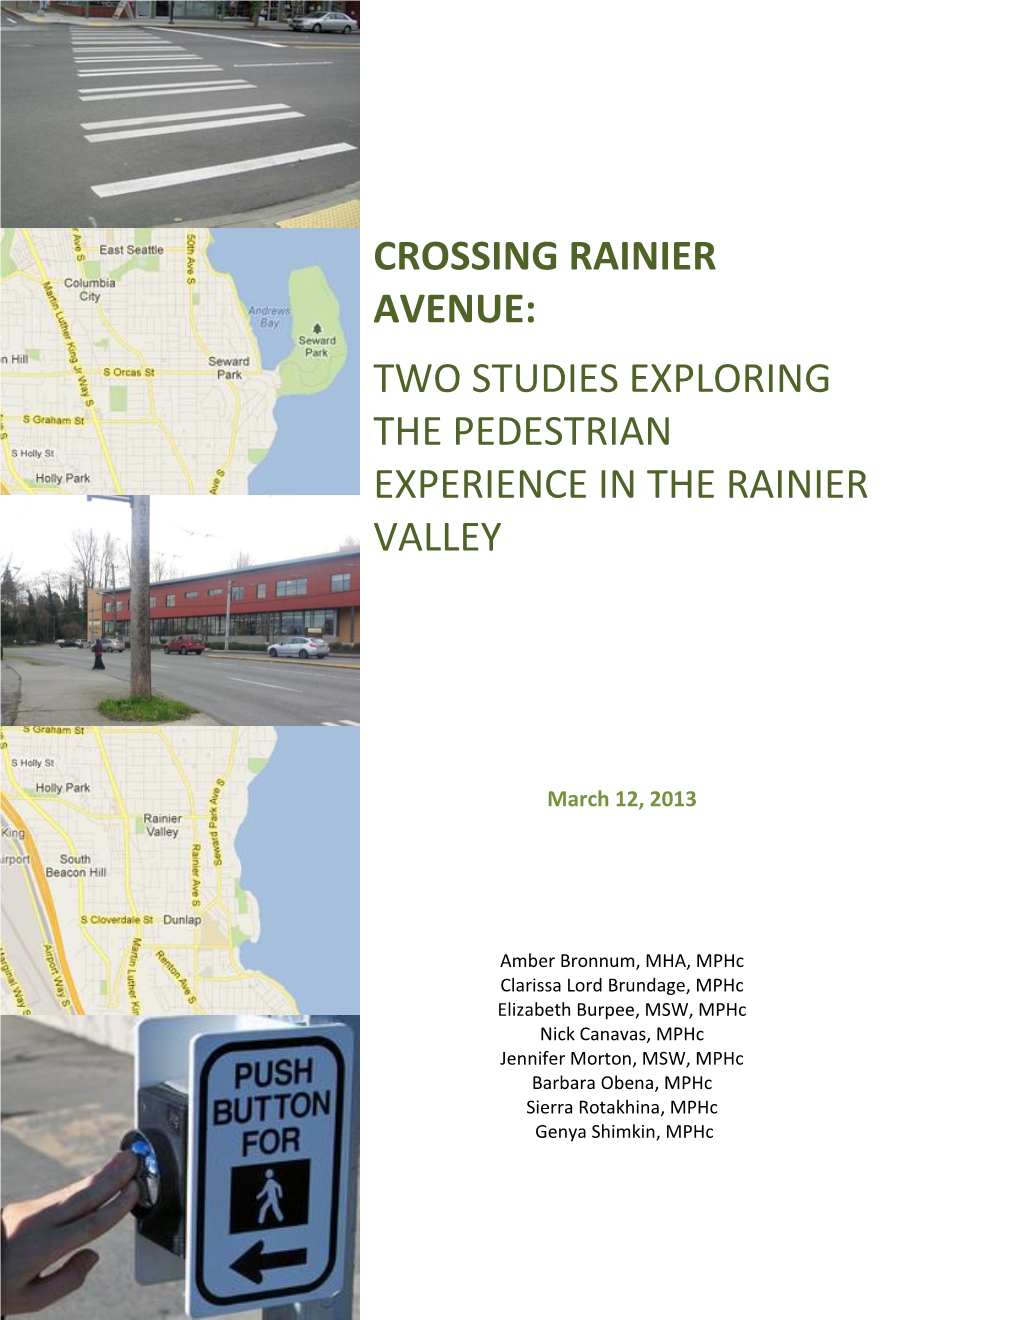 Crossing Rainier Avenue: Two Studies Exploring the Pedestrian Experience in the Rainier Valley